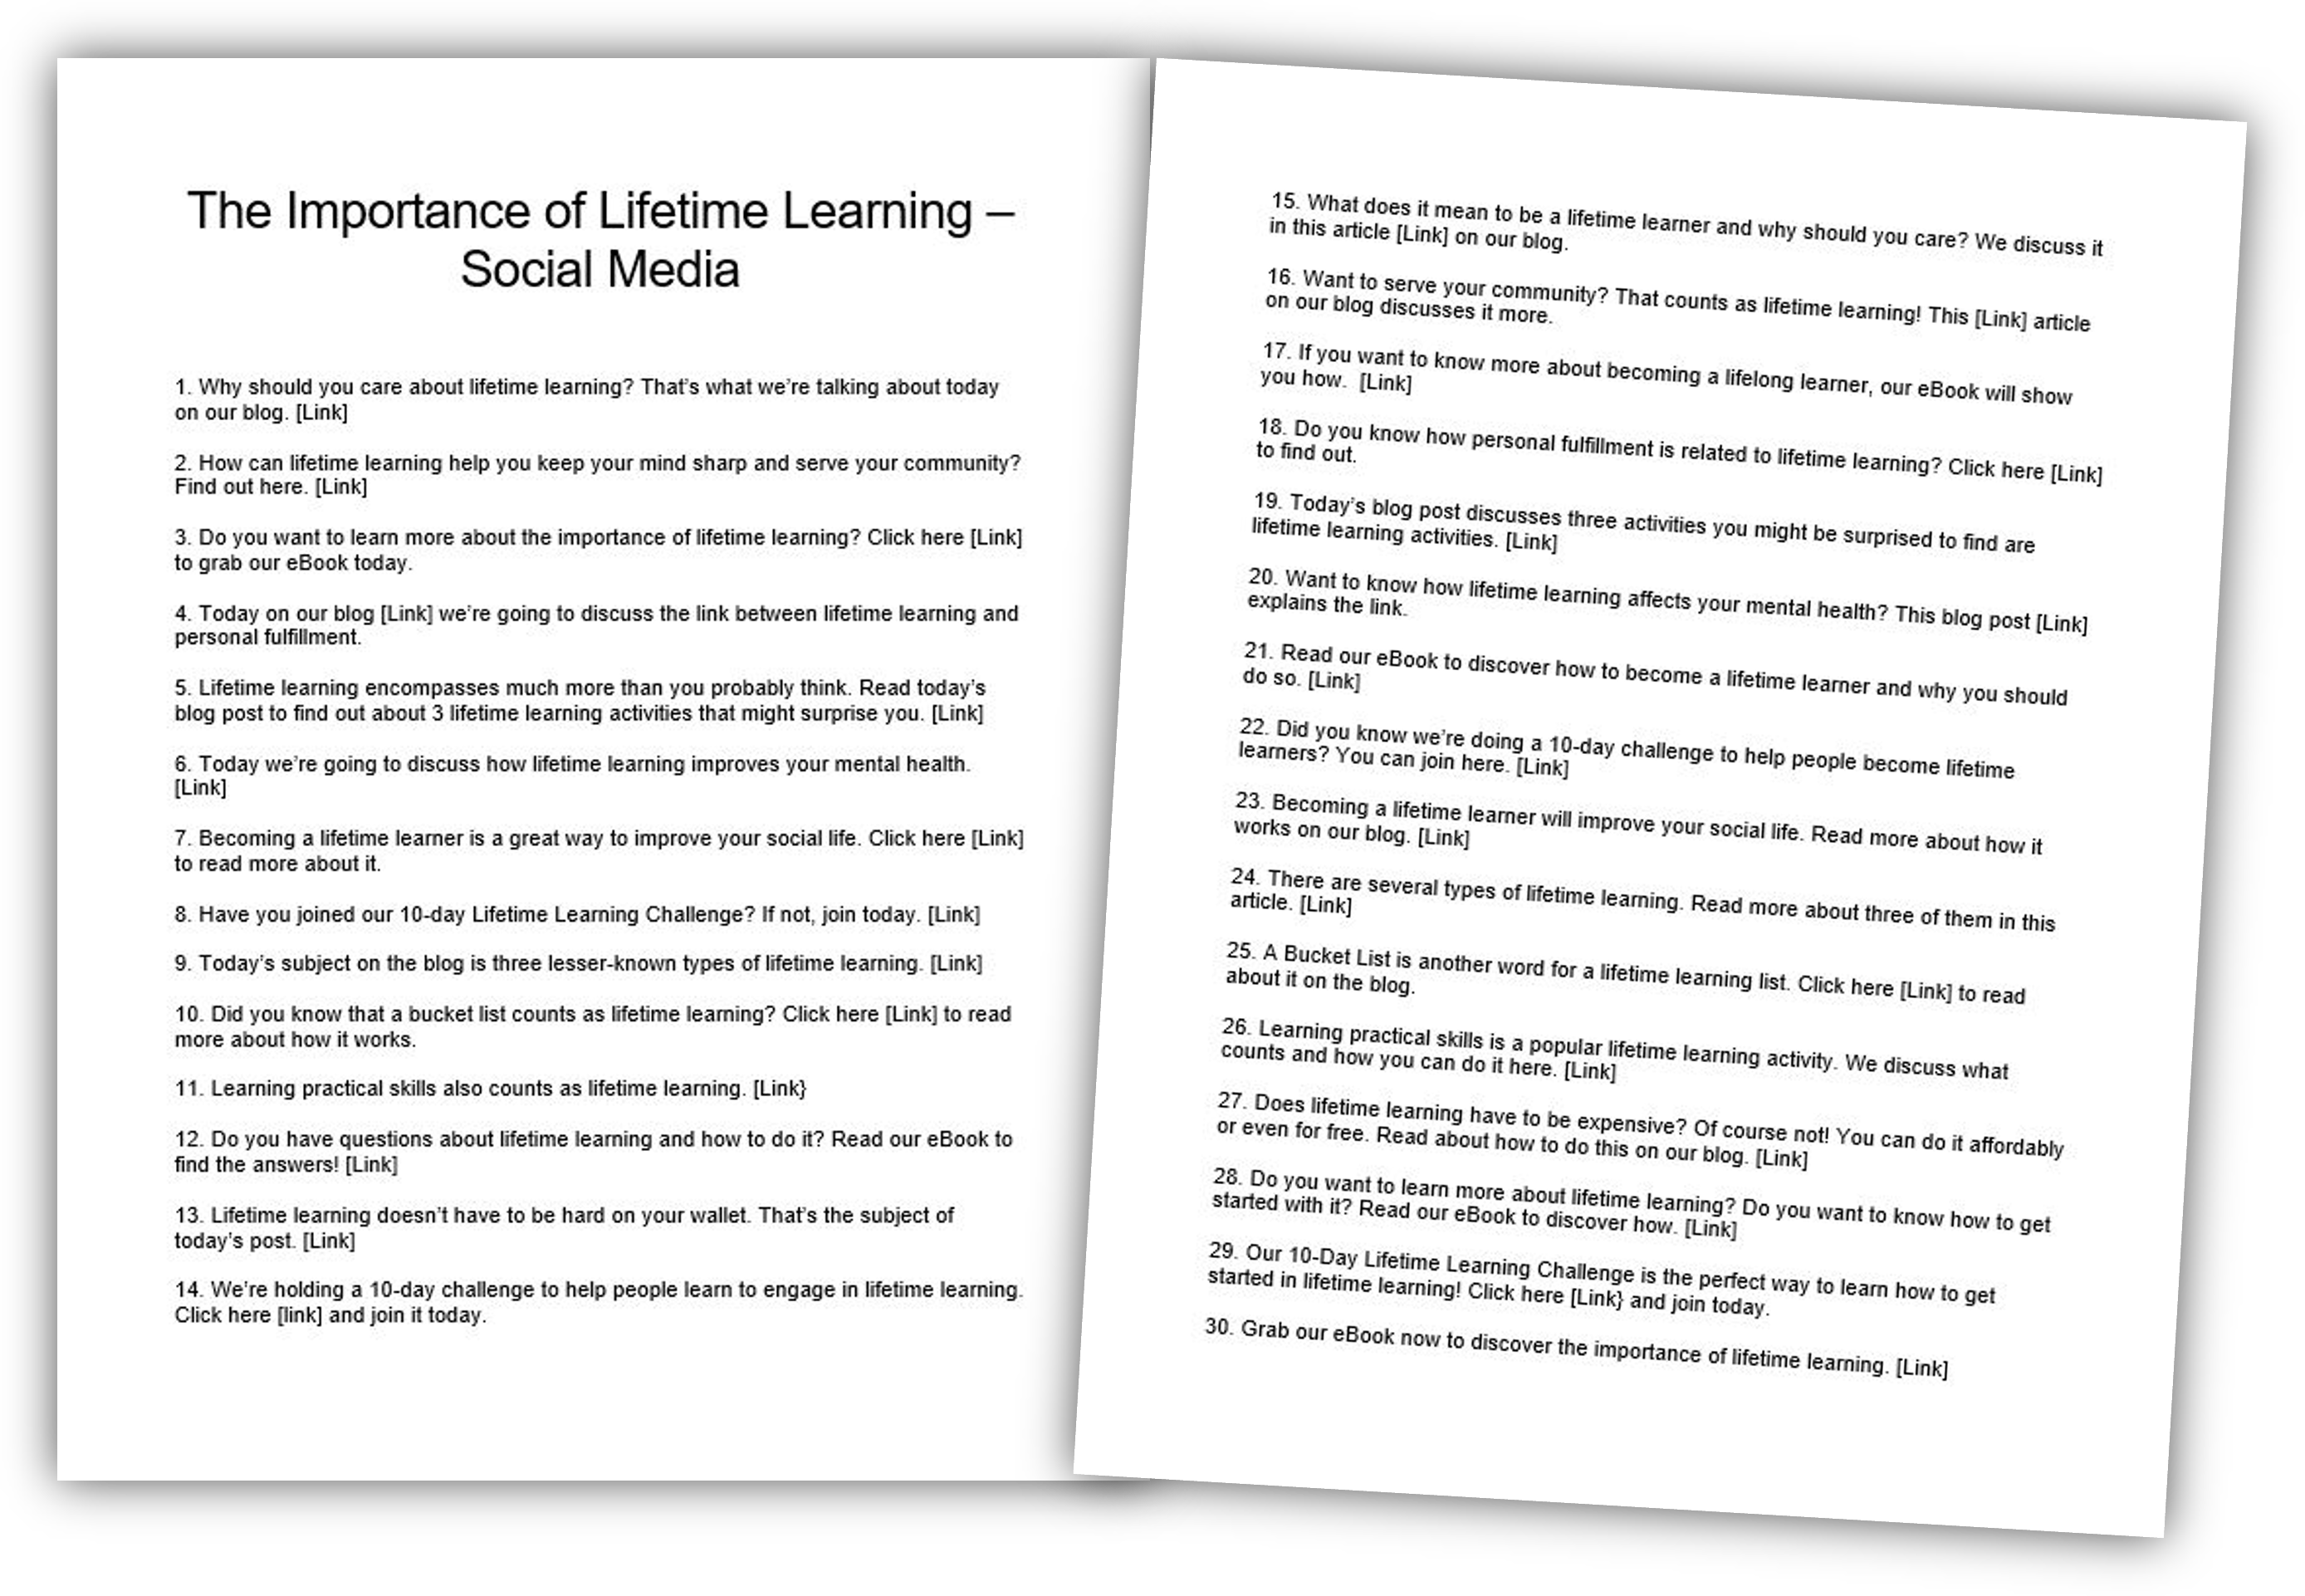 The Importance of Lifelong Learning PLR Social Media